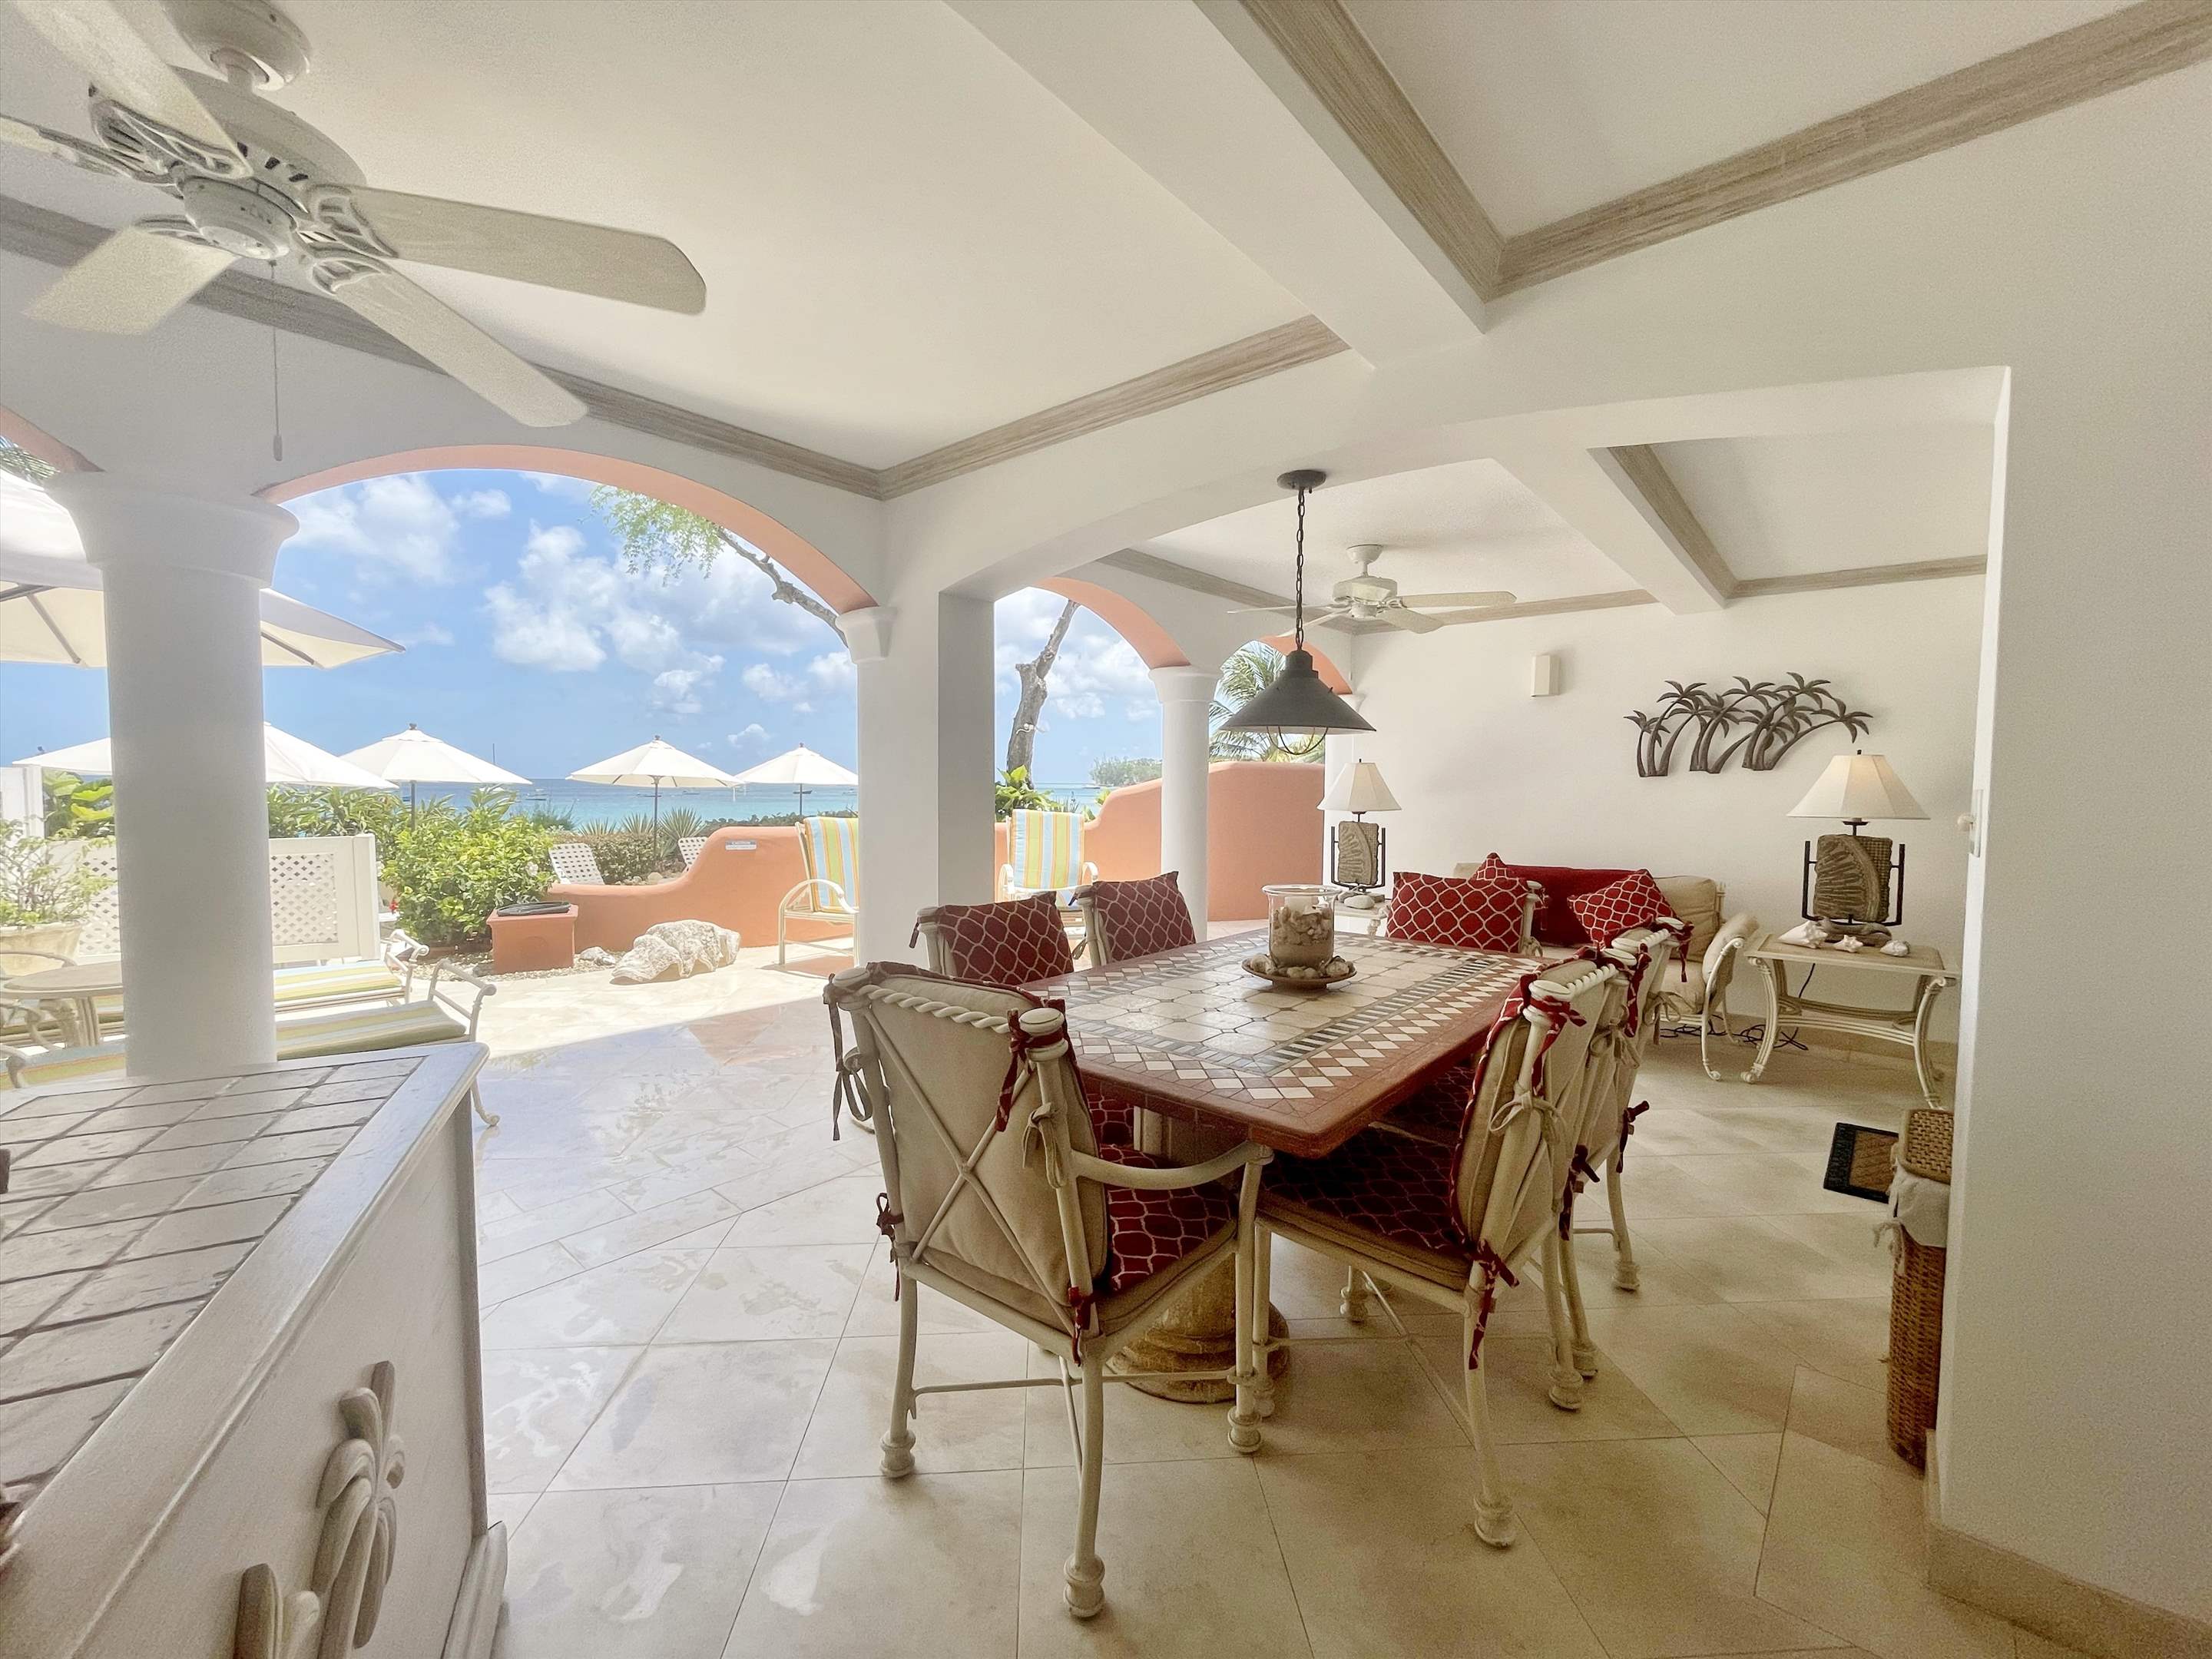 Villas on the Beach 101, 2 bedroom, 2 bedroom apartment in St. James & West Coast, Barbados Photo #2